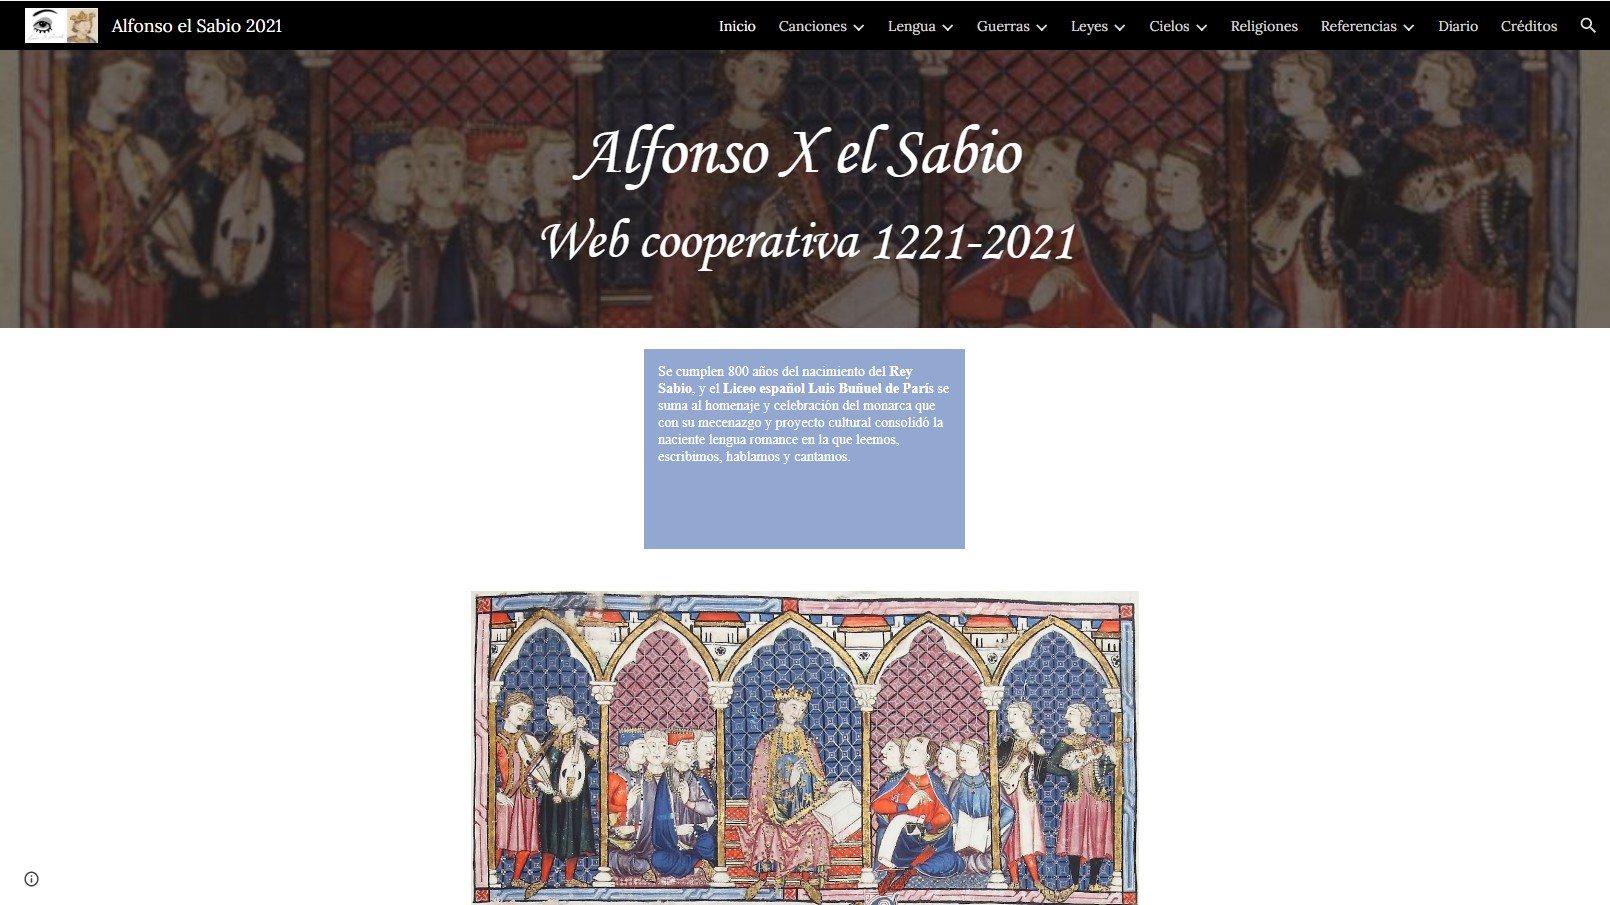 Alfonso X el Sabio. Web cooperativa 1221-2021